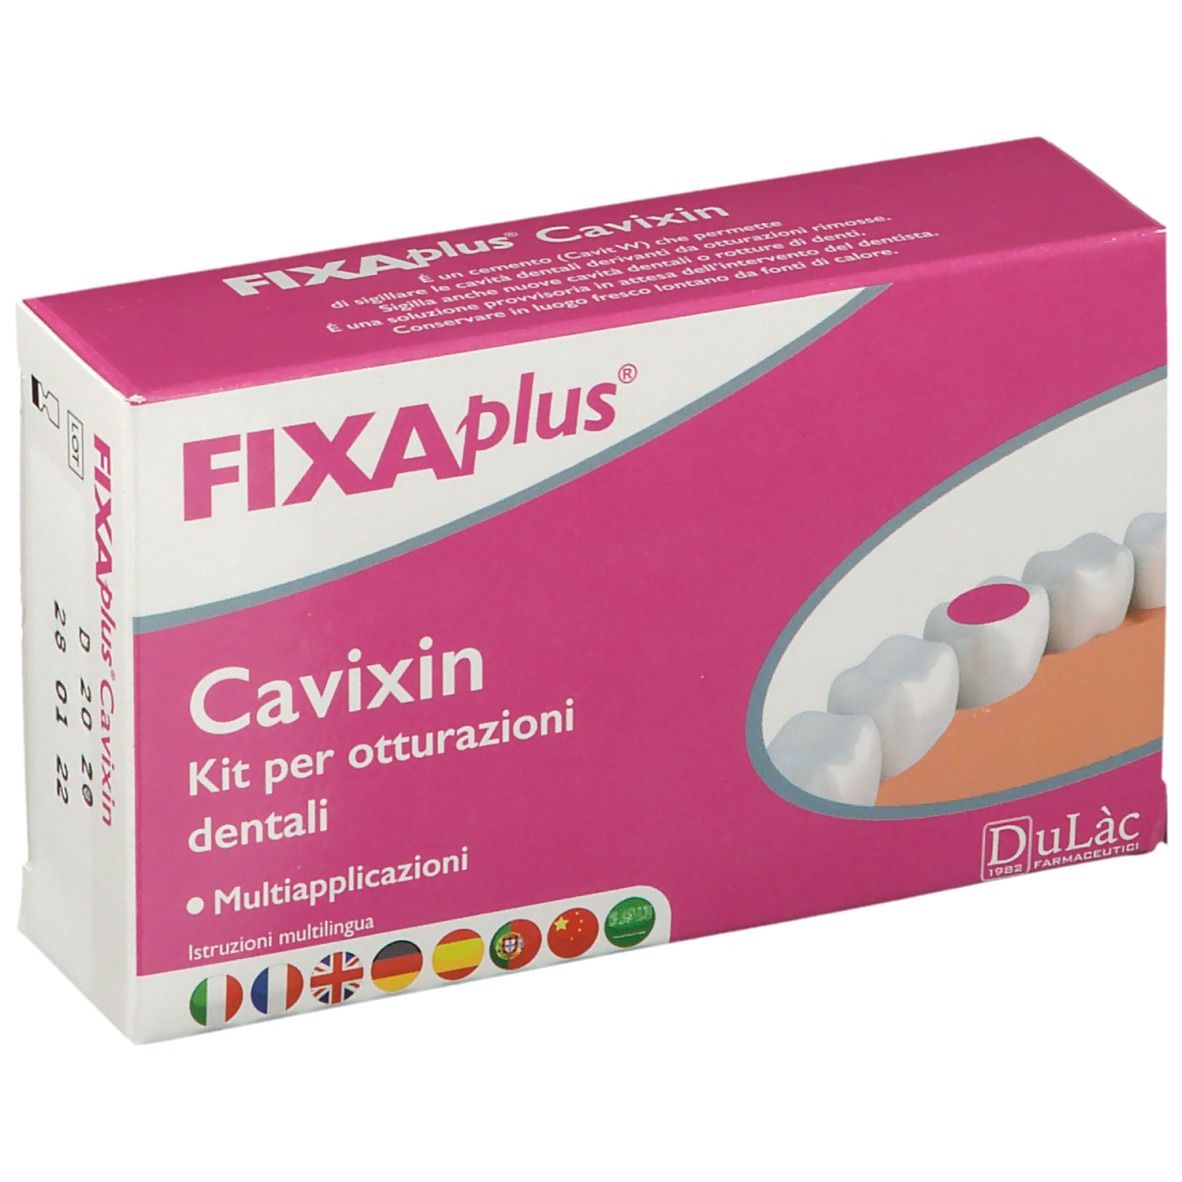 Fixa plus Cavixin kit per otturazioni dentali